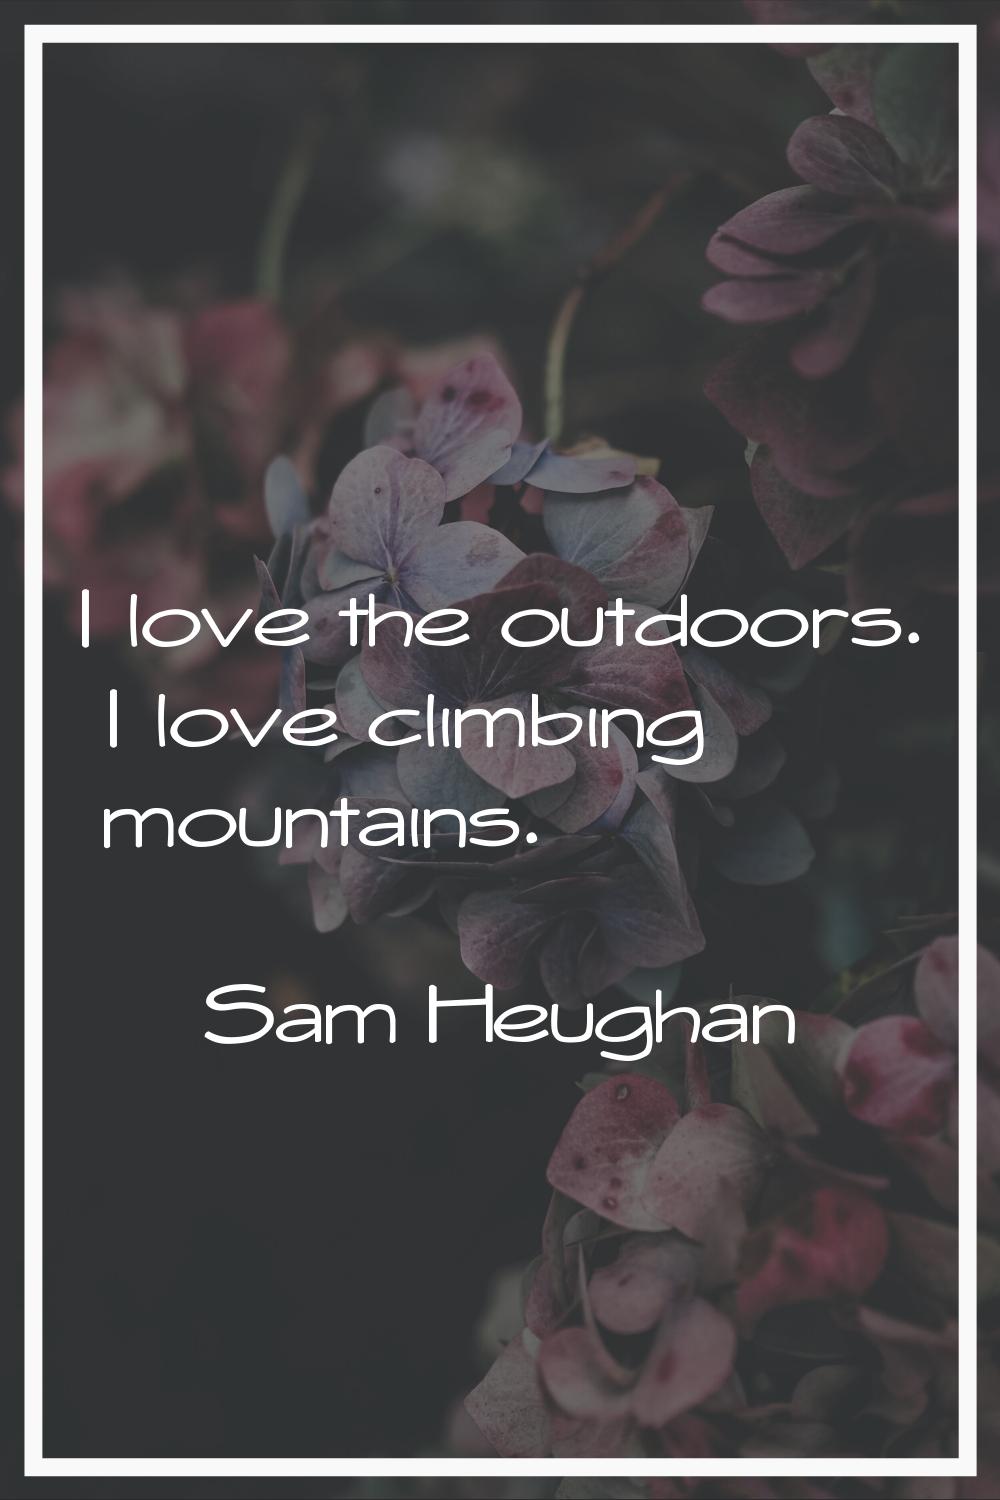 I love the outdoors. I love climbing mountains.